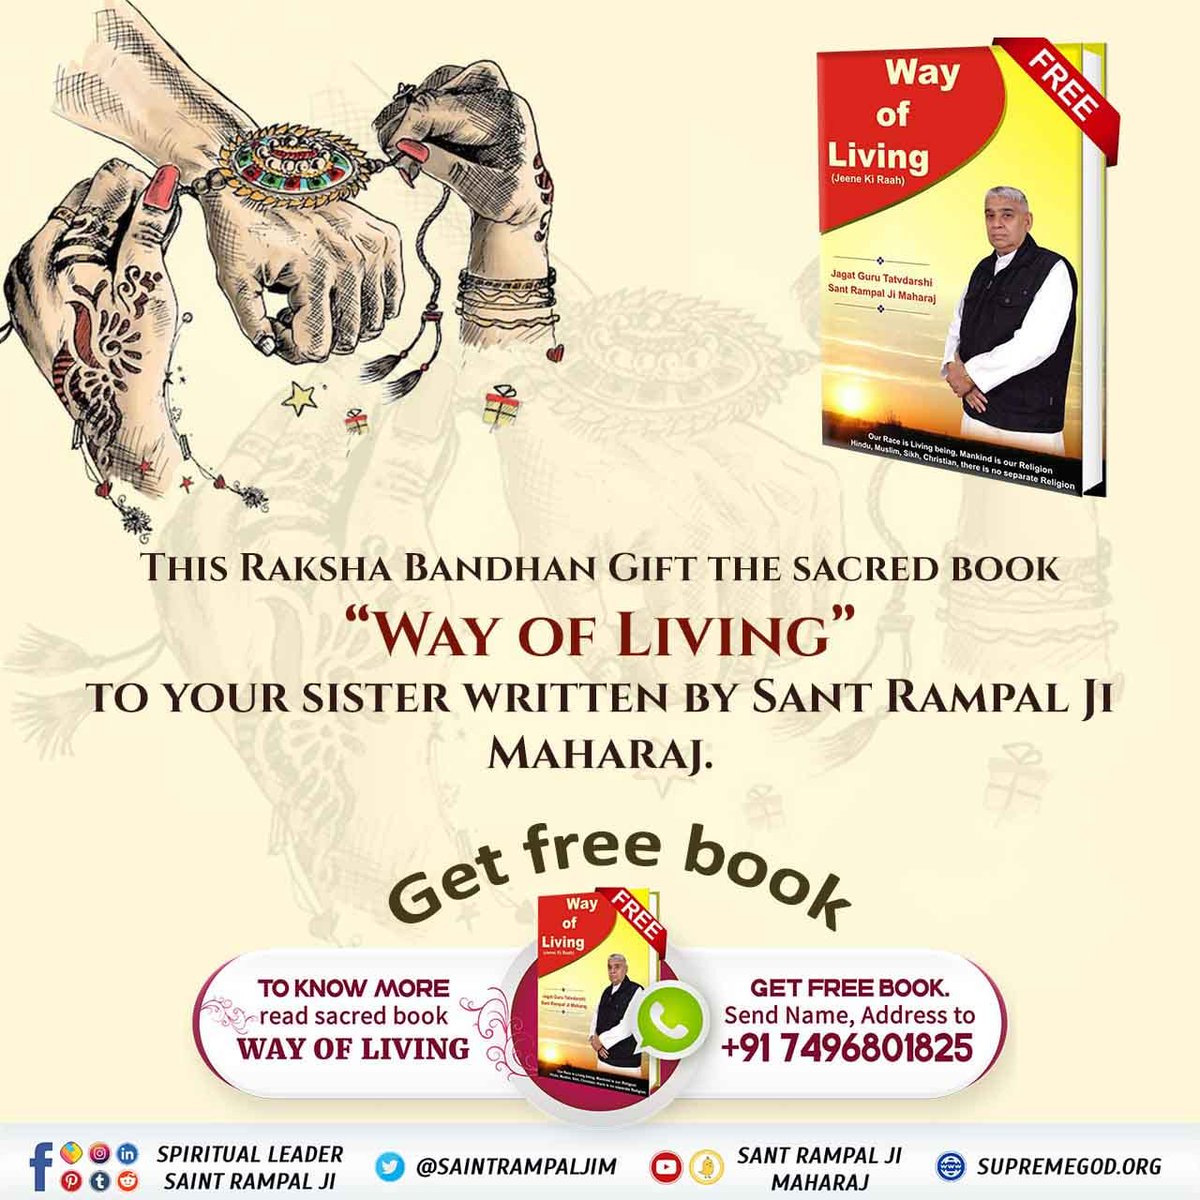 #GodMorningMonday
#जगत_उद्धारक_संत_रामपालजी
THIS RAKSHA BANDHAN GIFT THE SACRED BOOK
“WAY OF LIVING”
TO YOUR SISTER WRITTEN BY SANT RAMPAL JI MAHARAJ